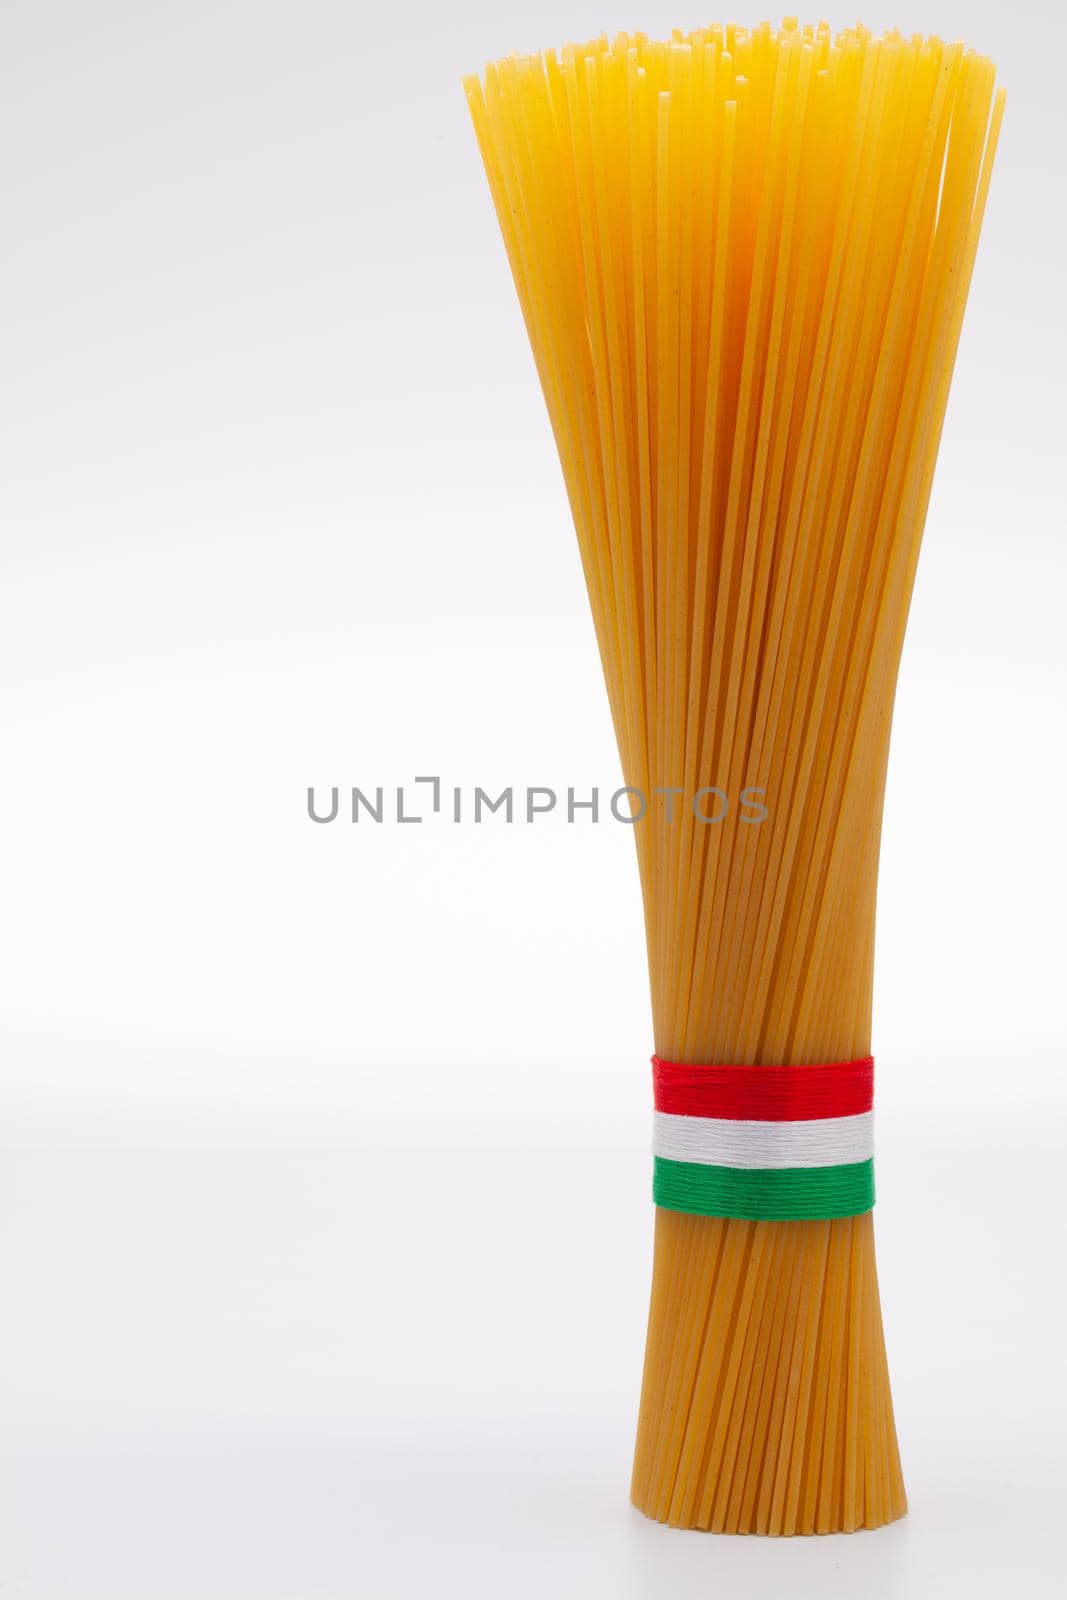 Bundle of spaghetti and Italian flag on the white background.